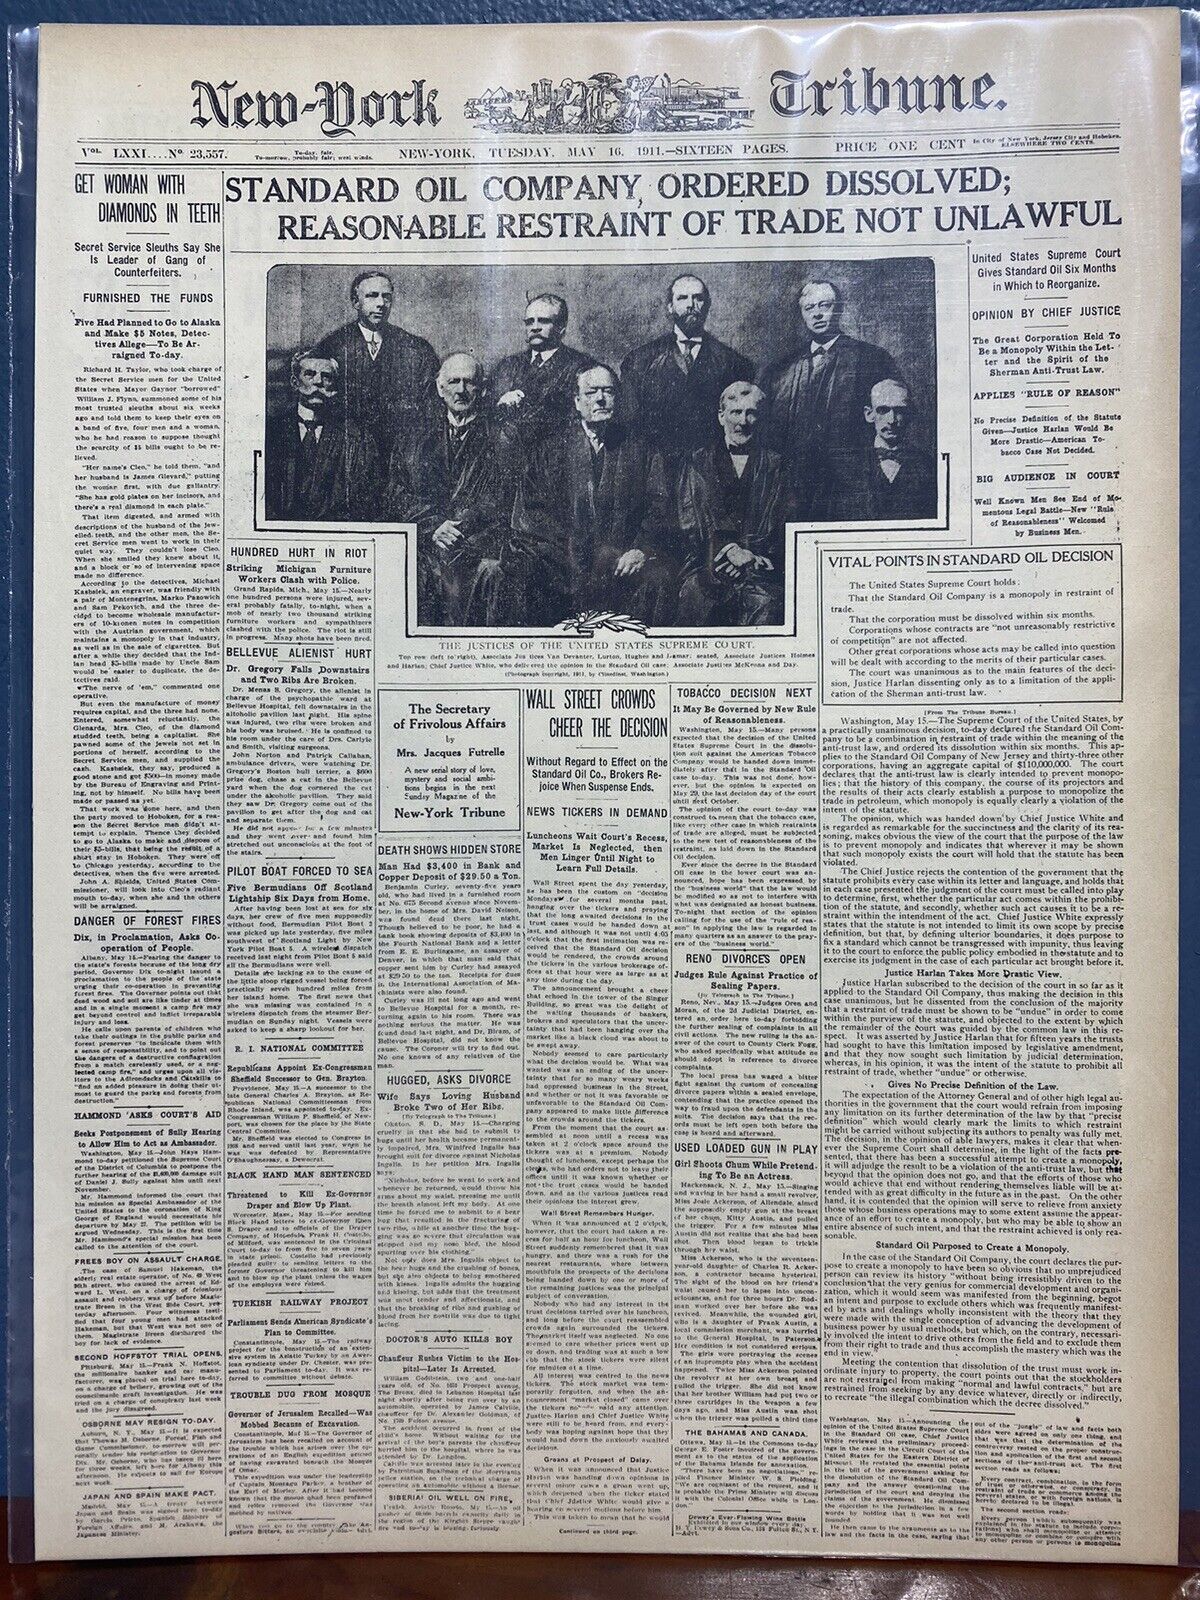 VINTAGE NEWSPAPER HEADLINE US SUPREME COURT DISSOLVES STANDARD OIL MONOPOLY 1911